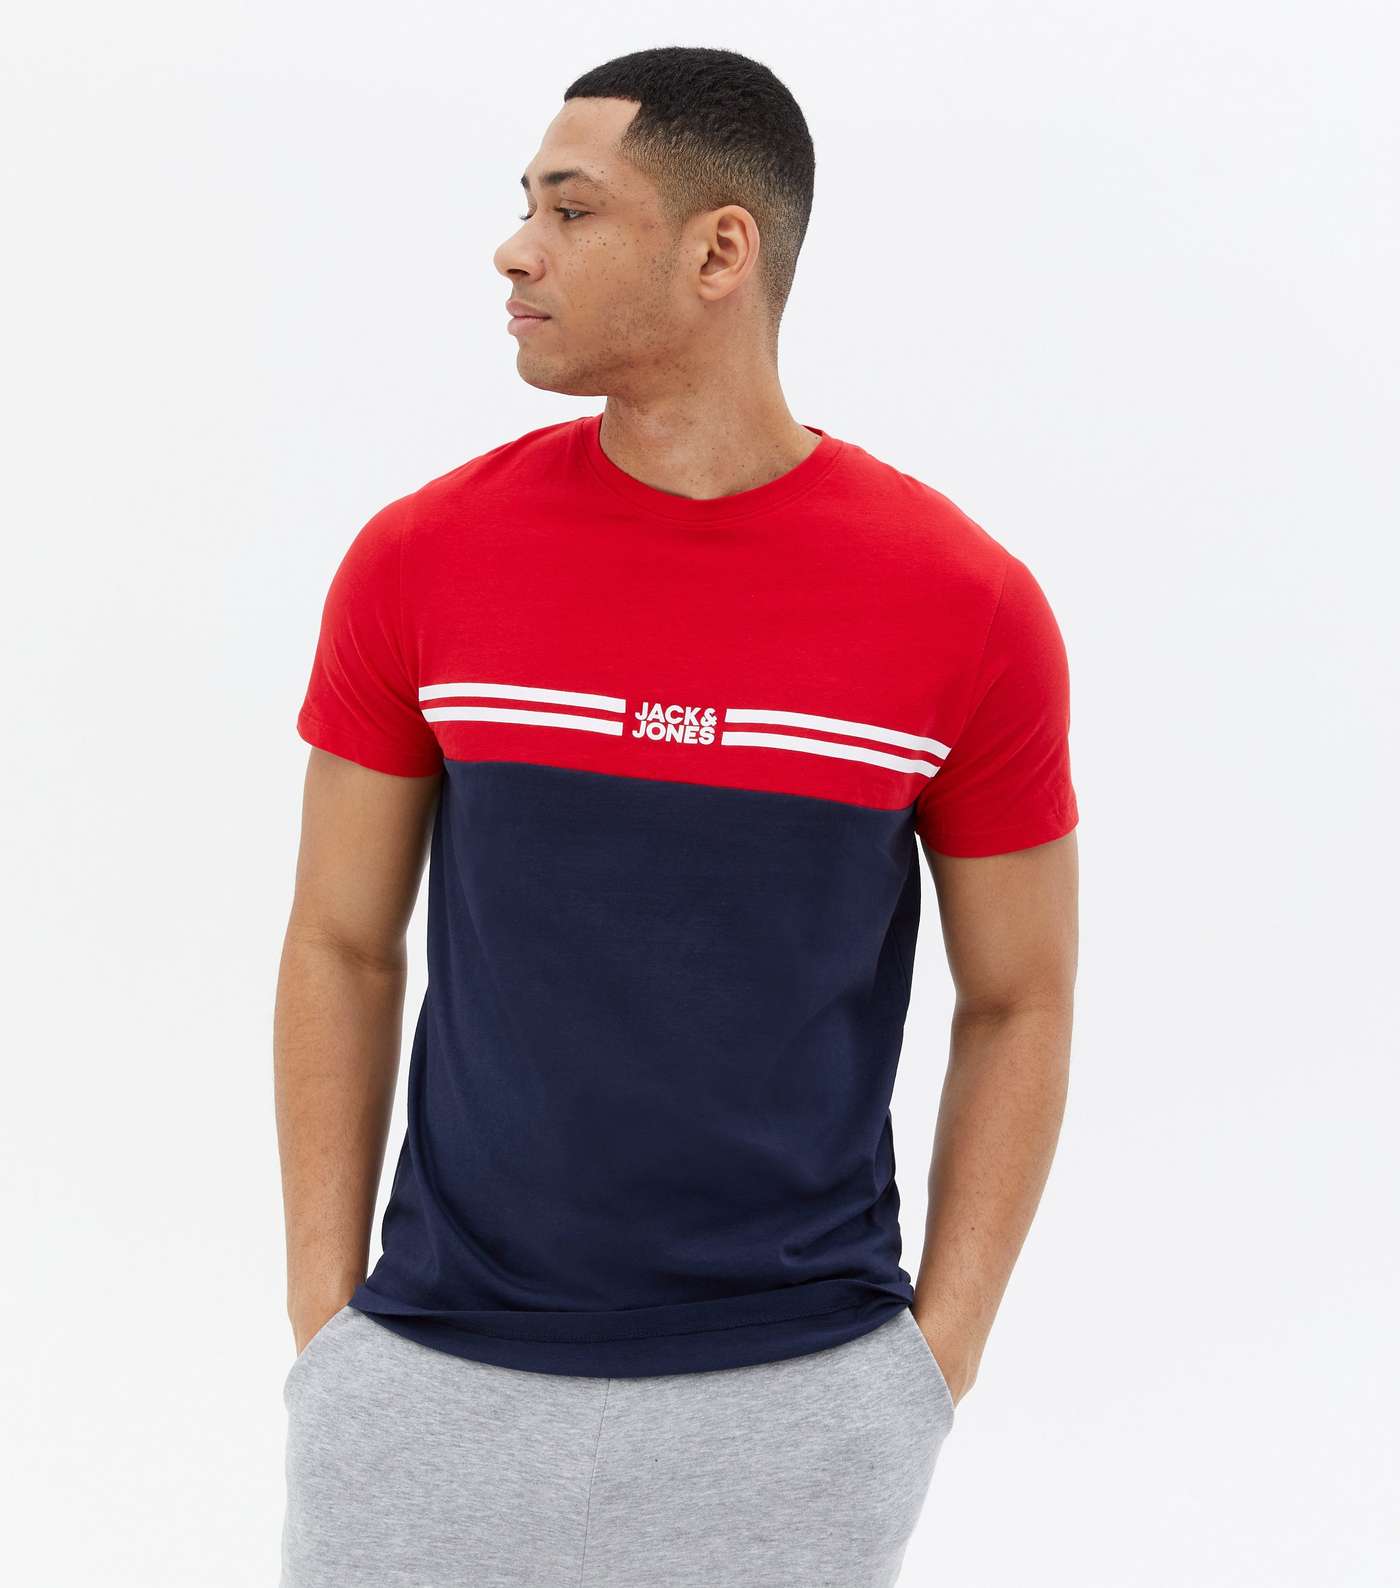 Jack & Jones Red Stripe Colour Block T-Shirt Image 2